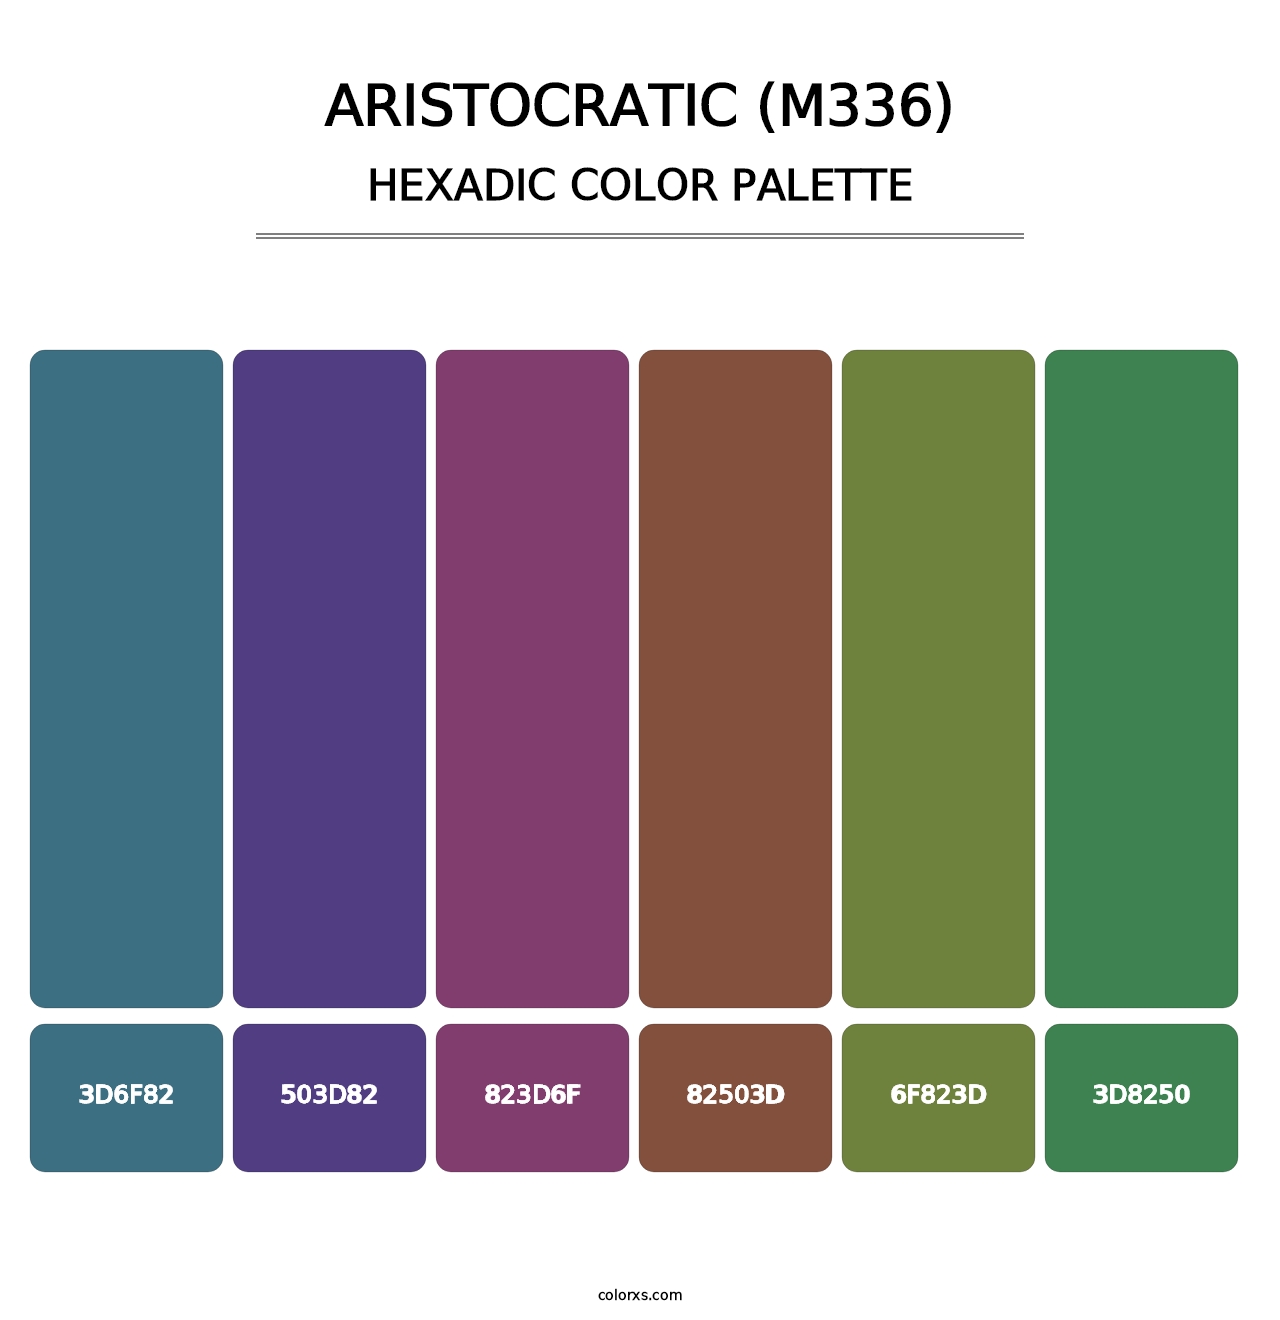 Aristocratic (M336) - Hexadic Color Palette